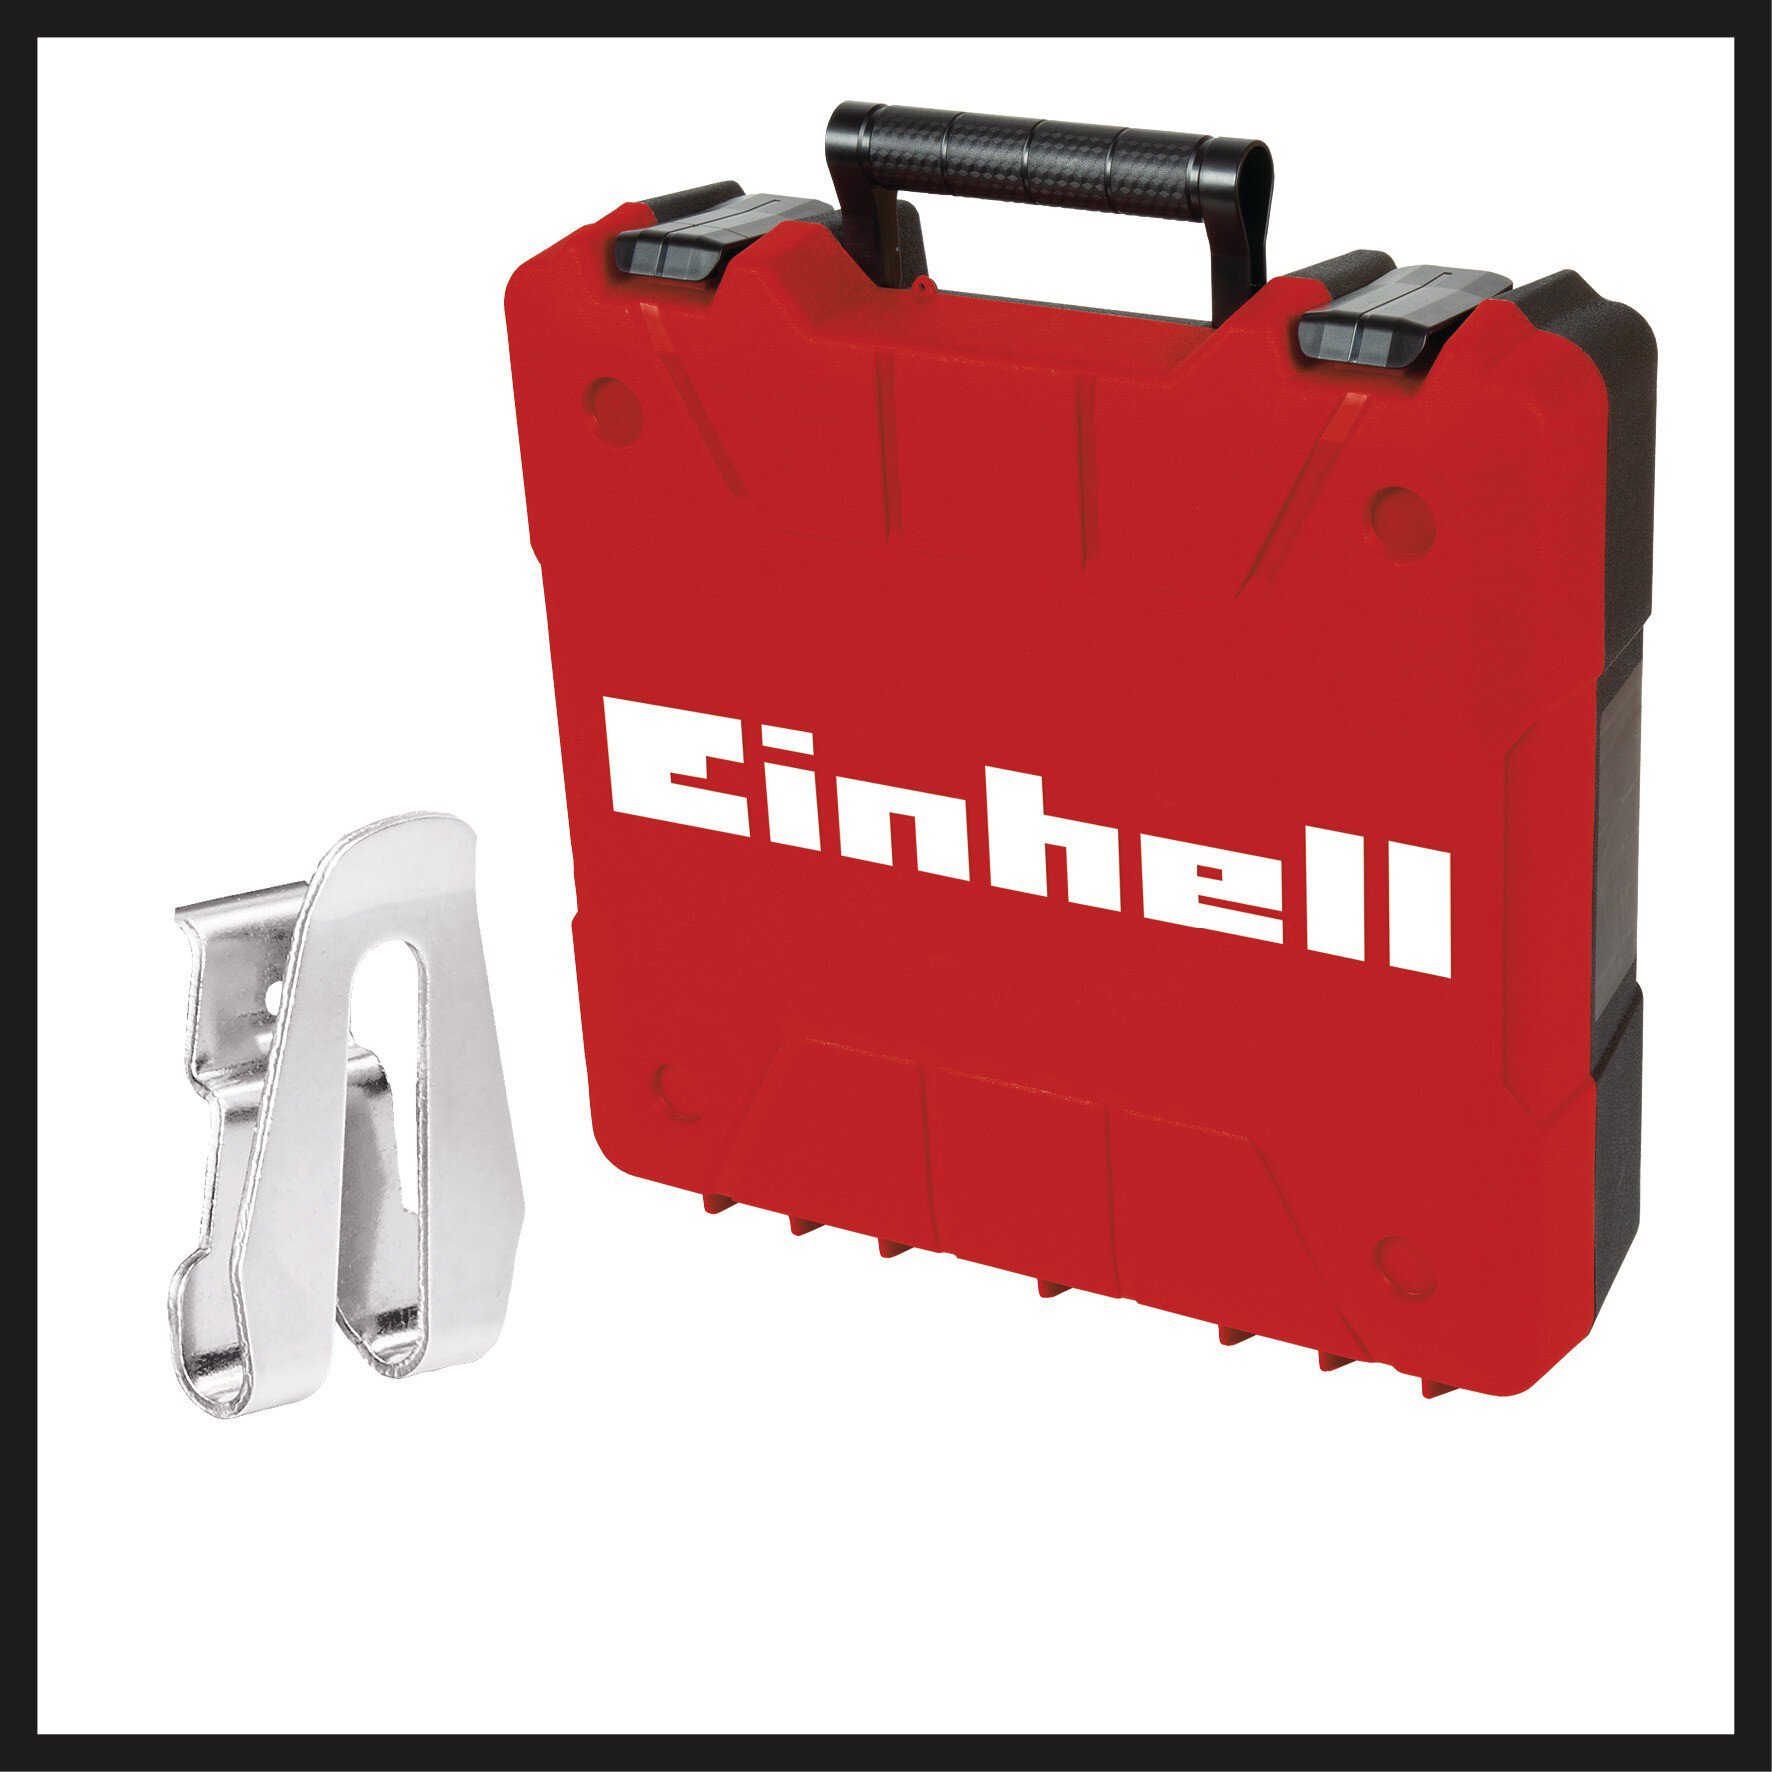 einhell-expert-cordless-drywall-screwdriver-4259980-detail_image-004